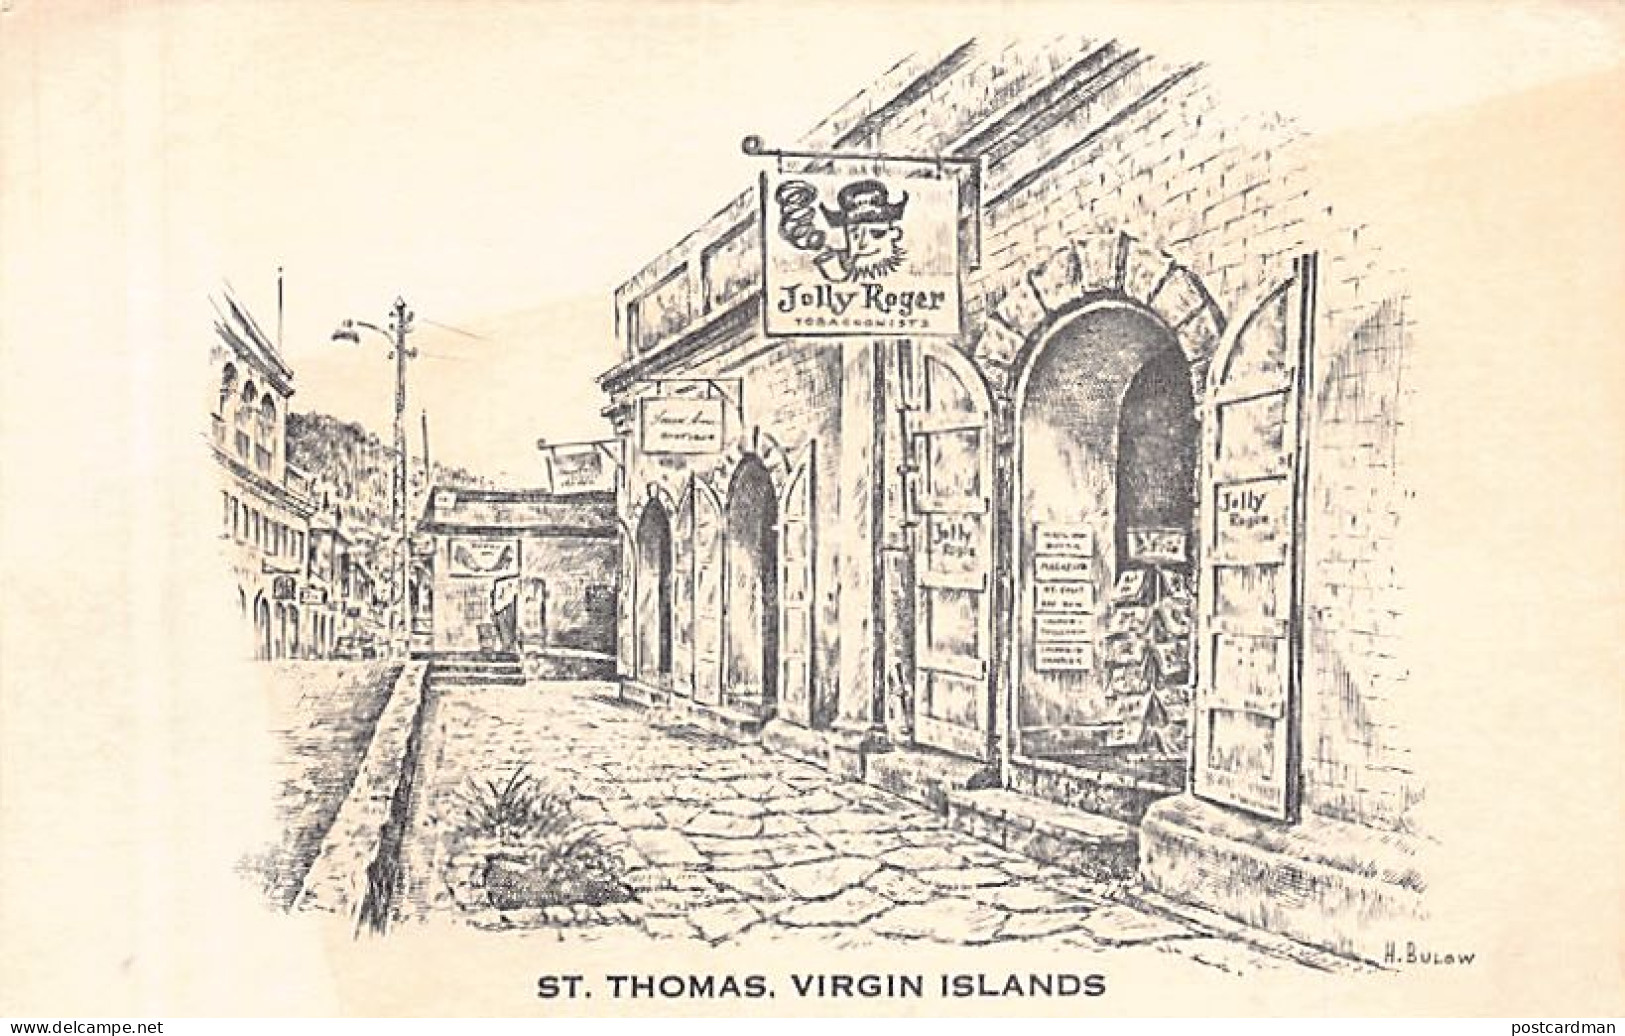 U.S. Virgin Islands - ST. THOMAS - Jolly Roger - Tobacconists - Publ. Hans Bulow  - Jungferninseln, Amerik.